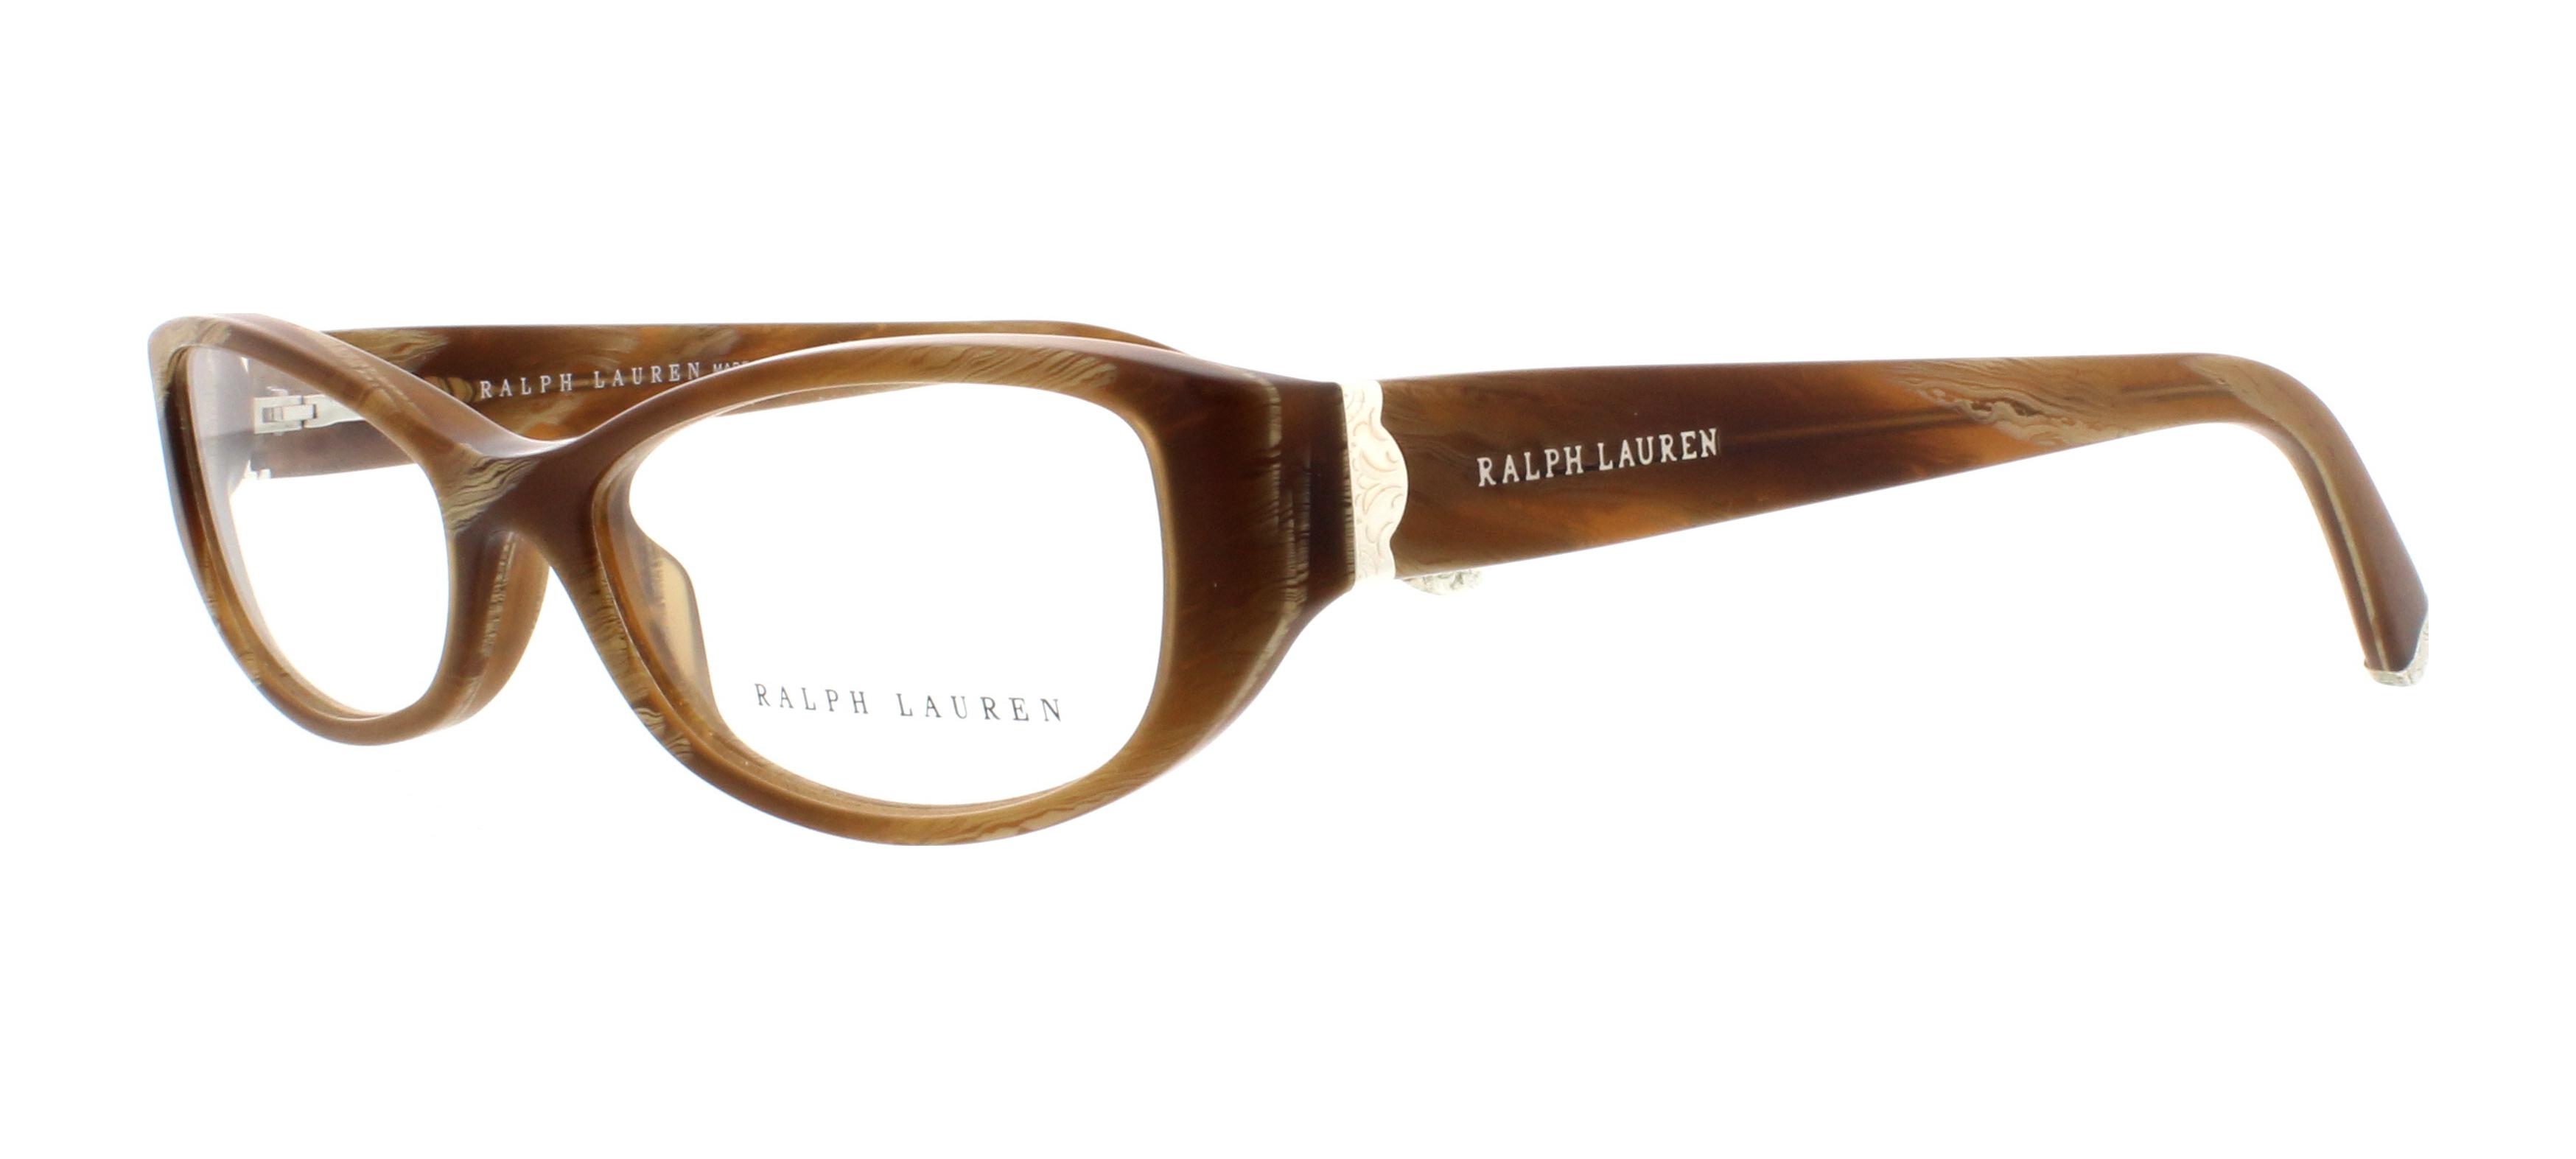 Designer Frames Outlet. Ralph Lauren Eyeglasses RL6108